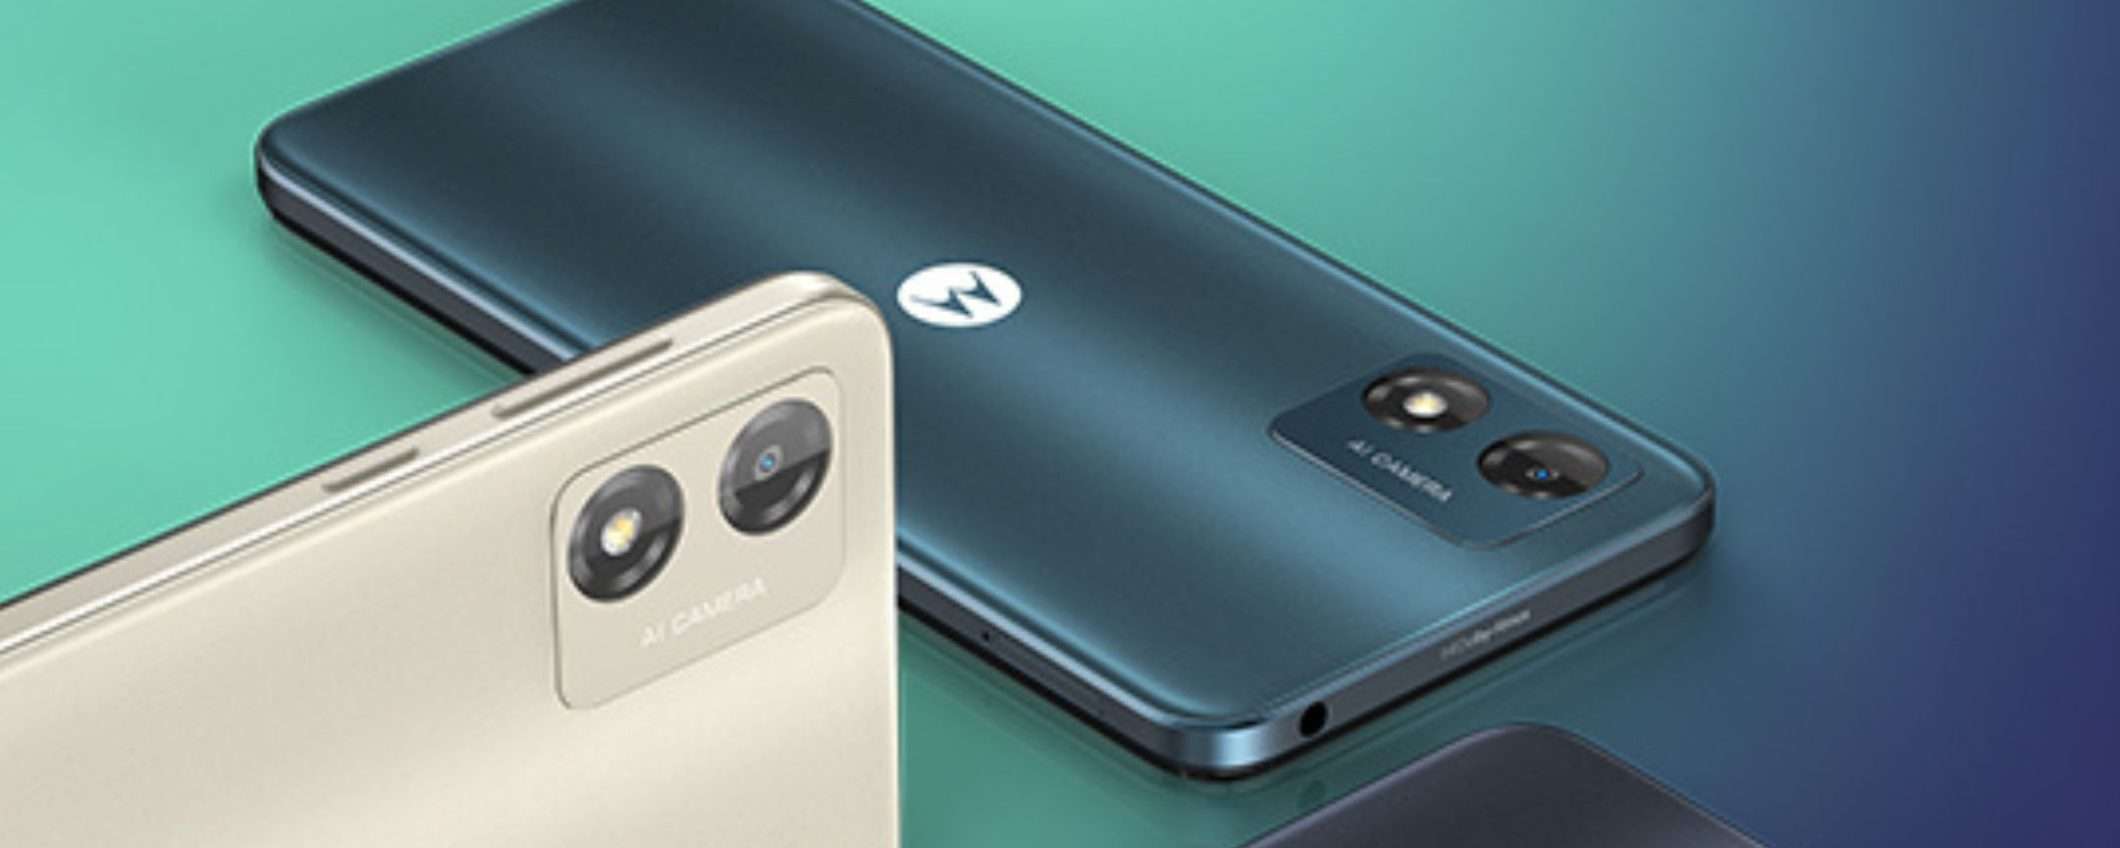 Tripla cam 50MP e batteria INFINITA: Motorola Moto g13 a 107€ su eBay